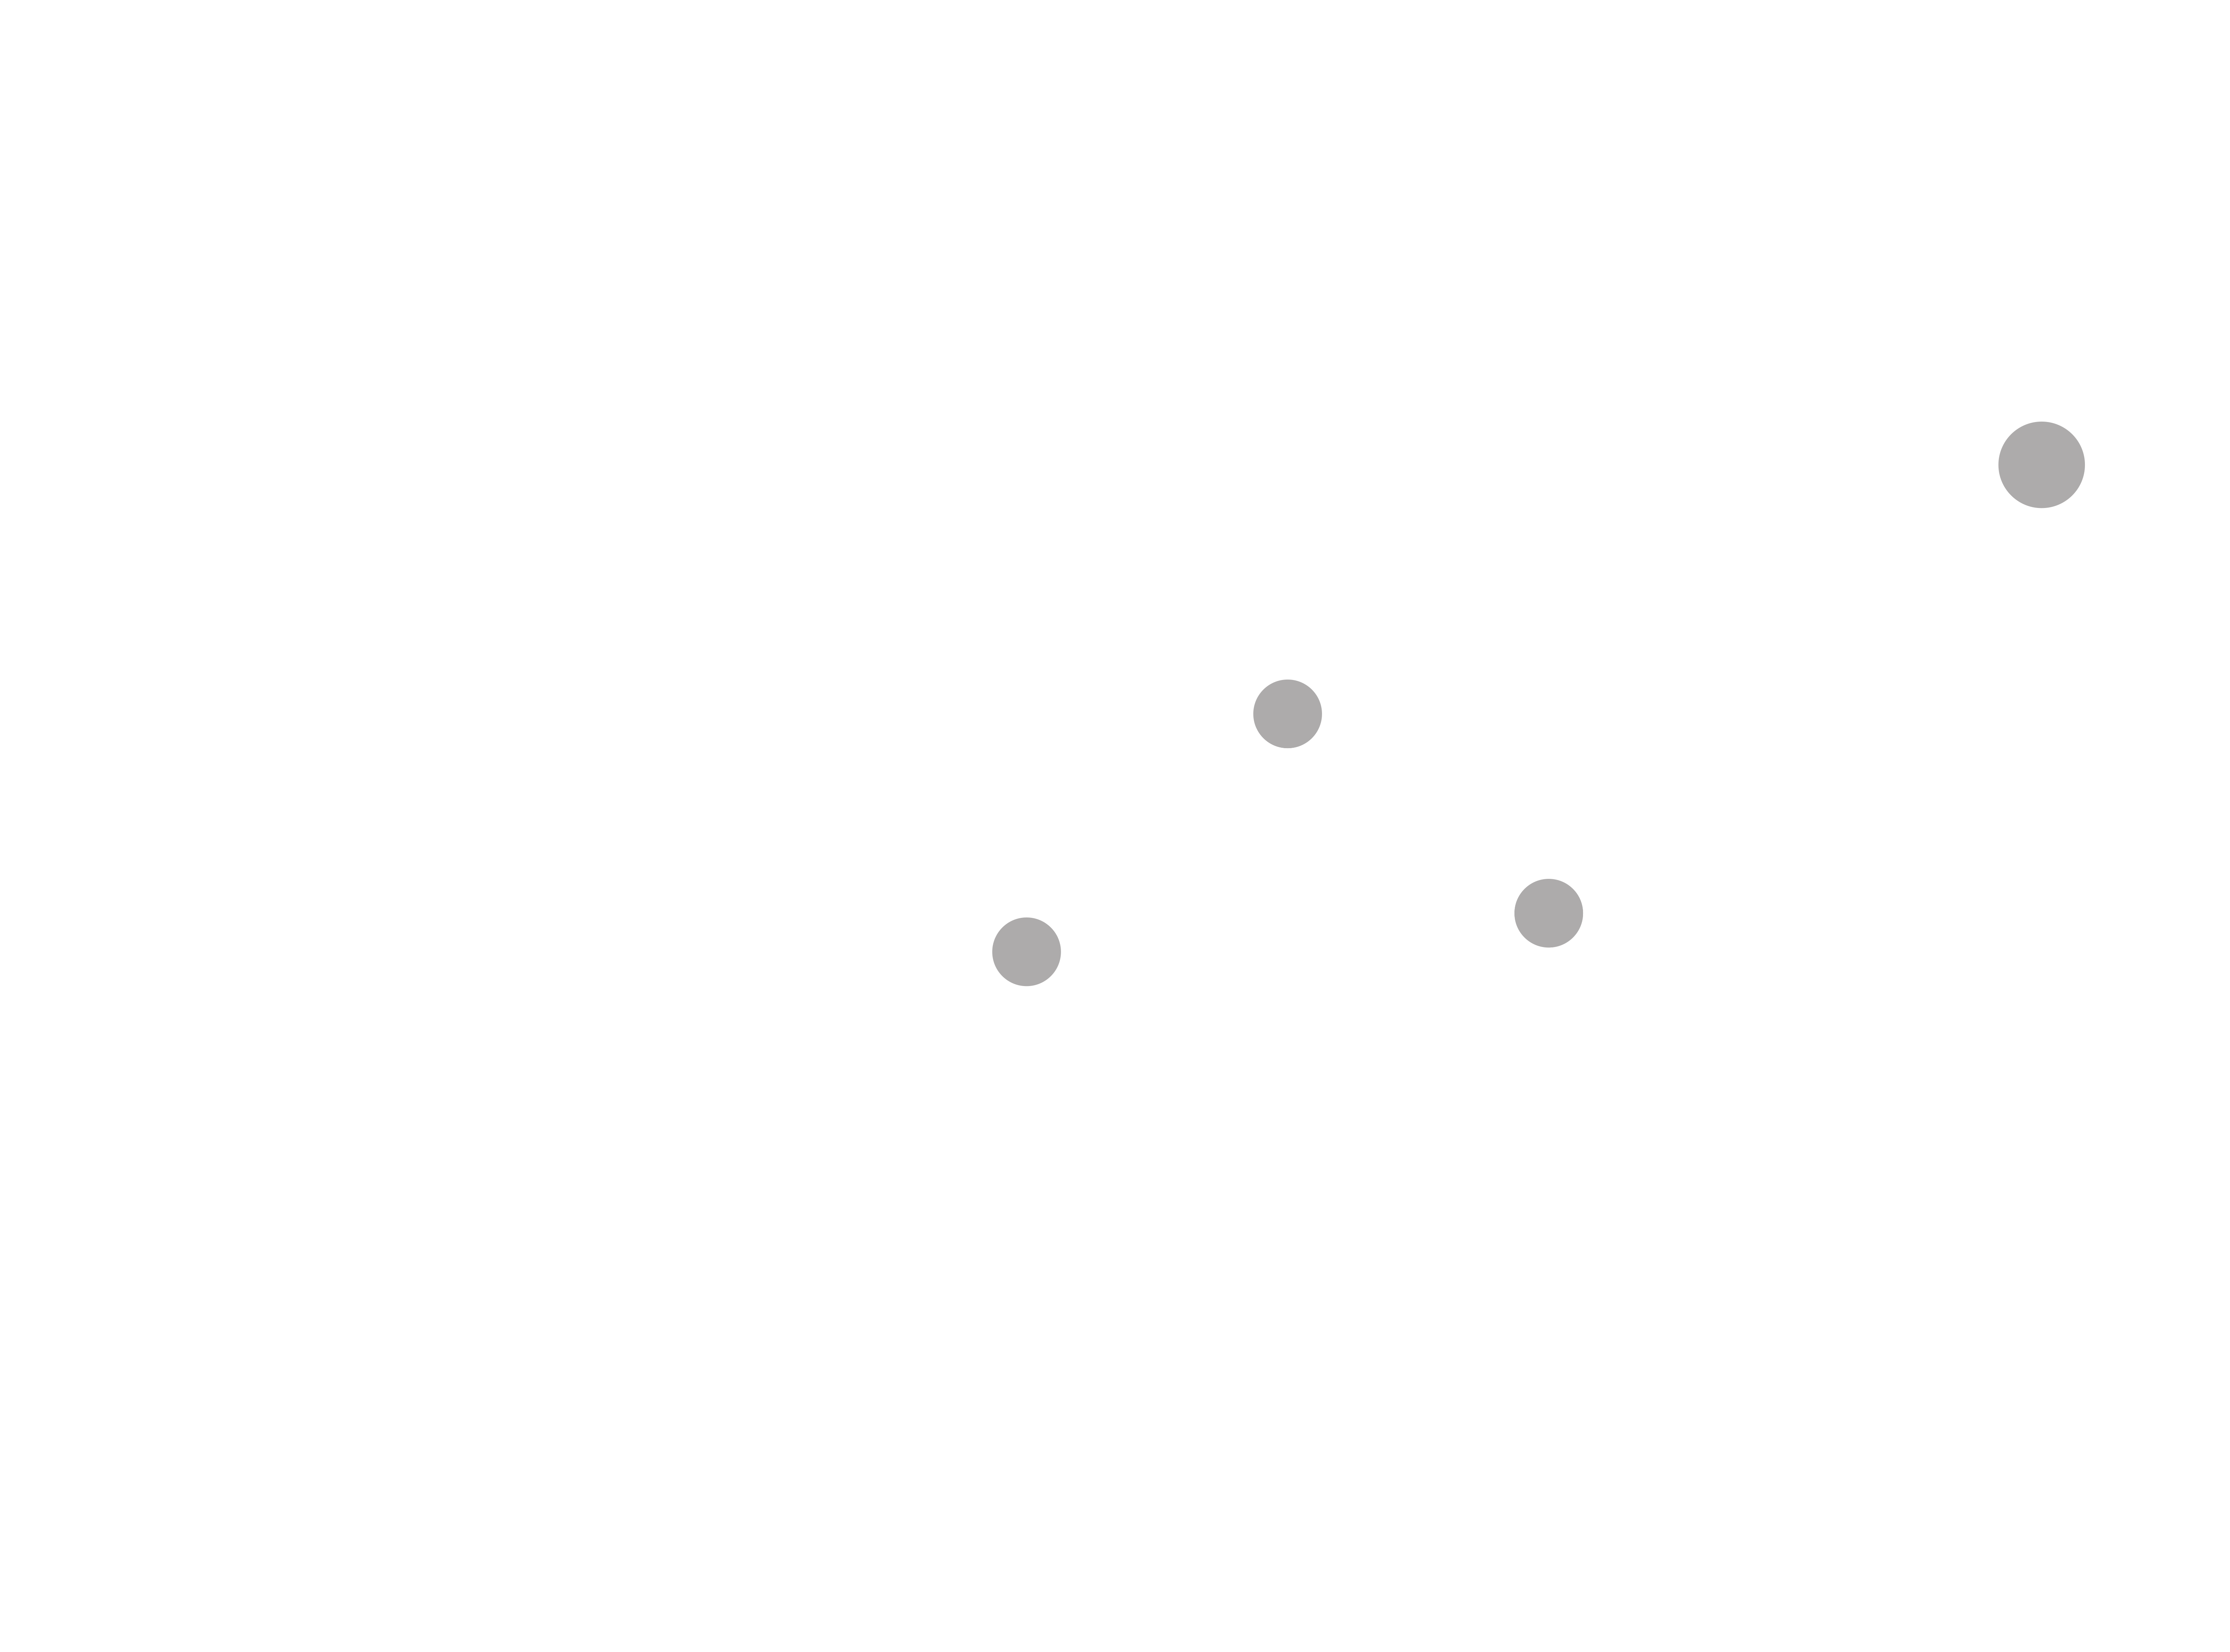 The SEO Leadership Podcast